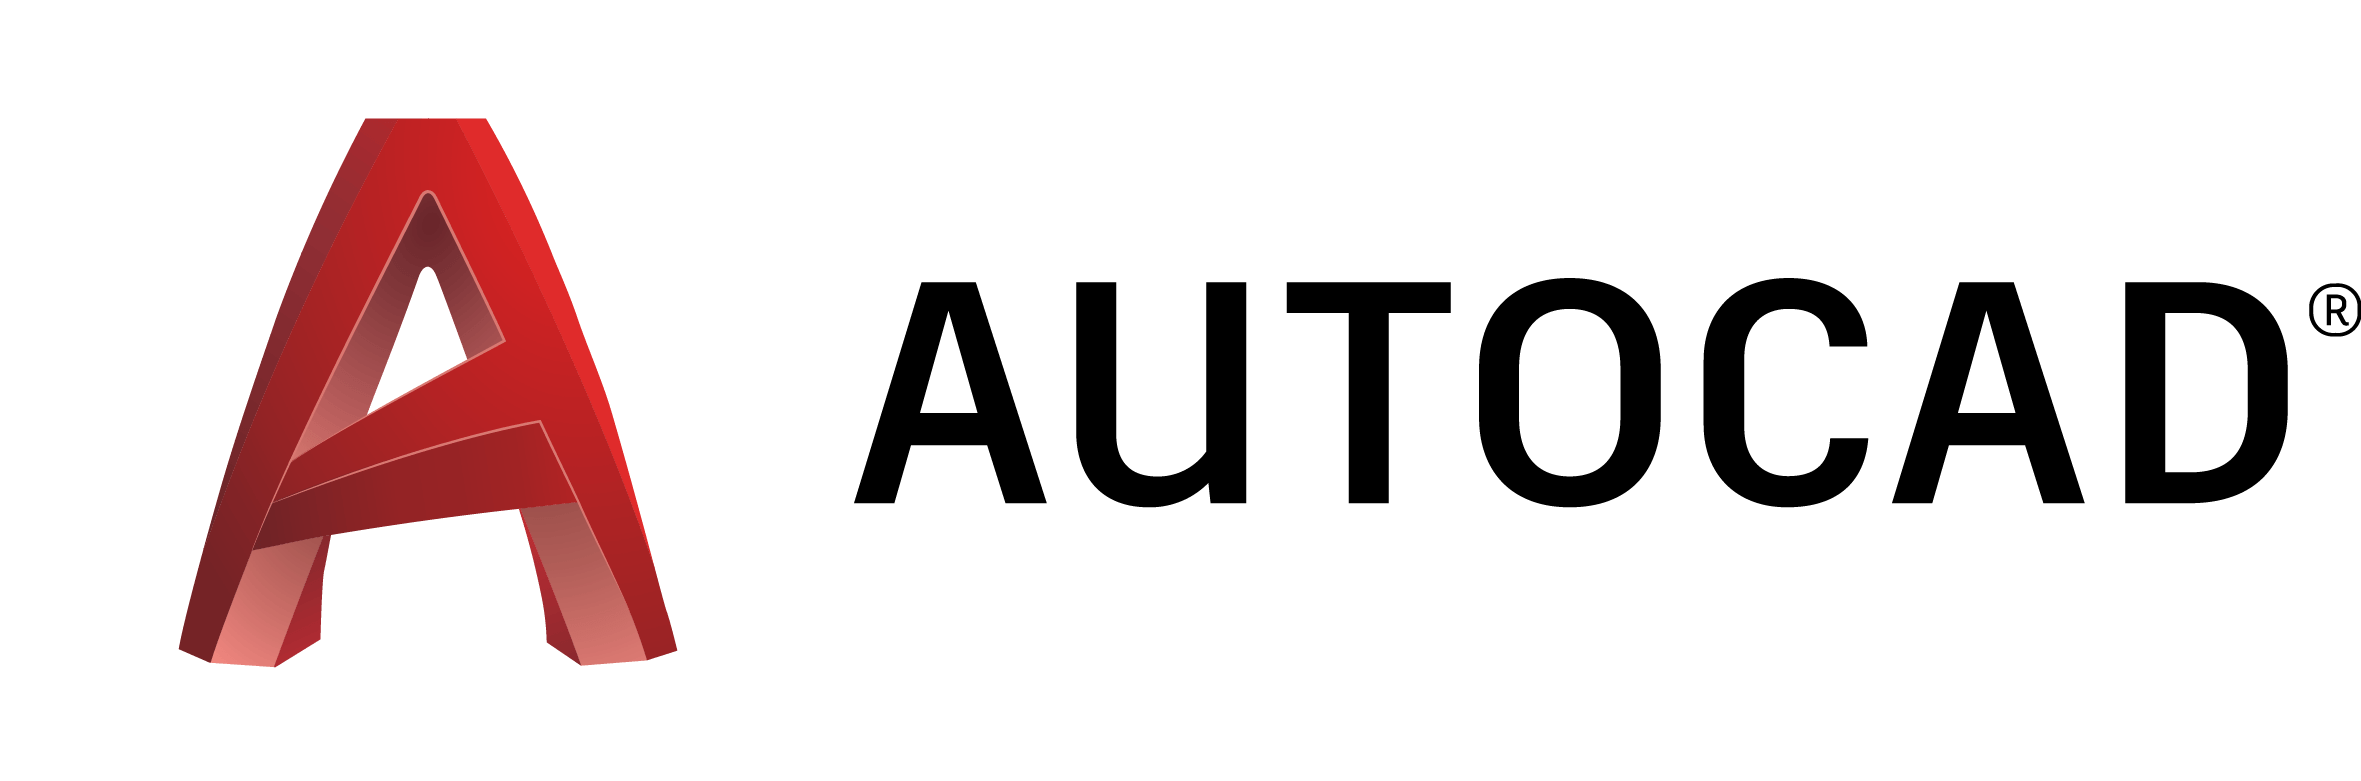 AutoCAD Logo - AMFG Supports AutoCAD - AMFG